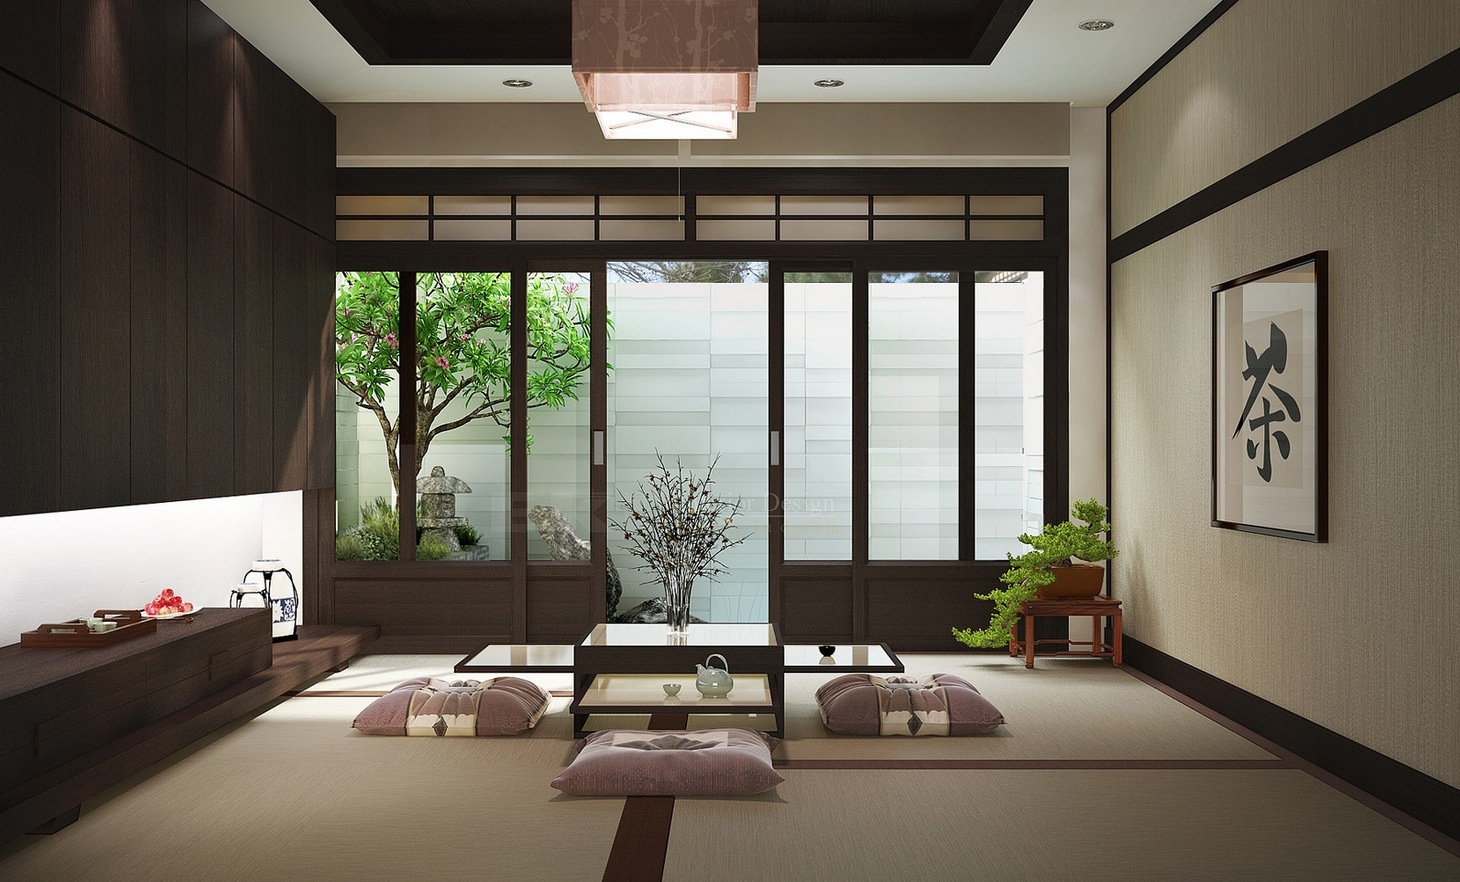 3 tips For A Modern Minimalist Zen Interior Design Home, by Simone Edward  Art